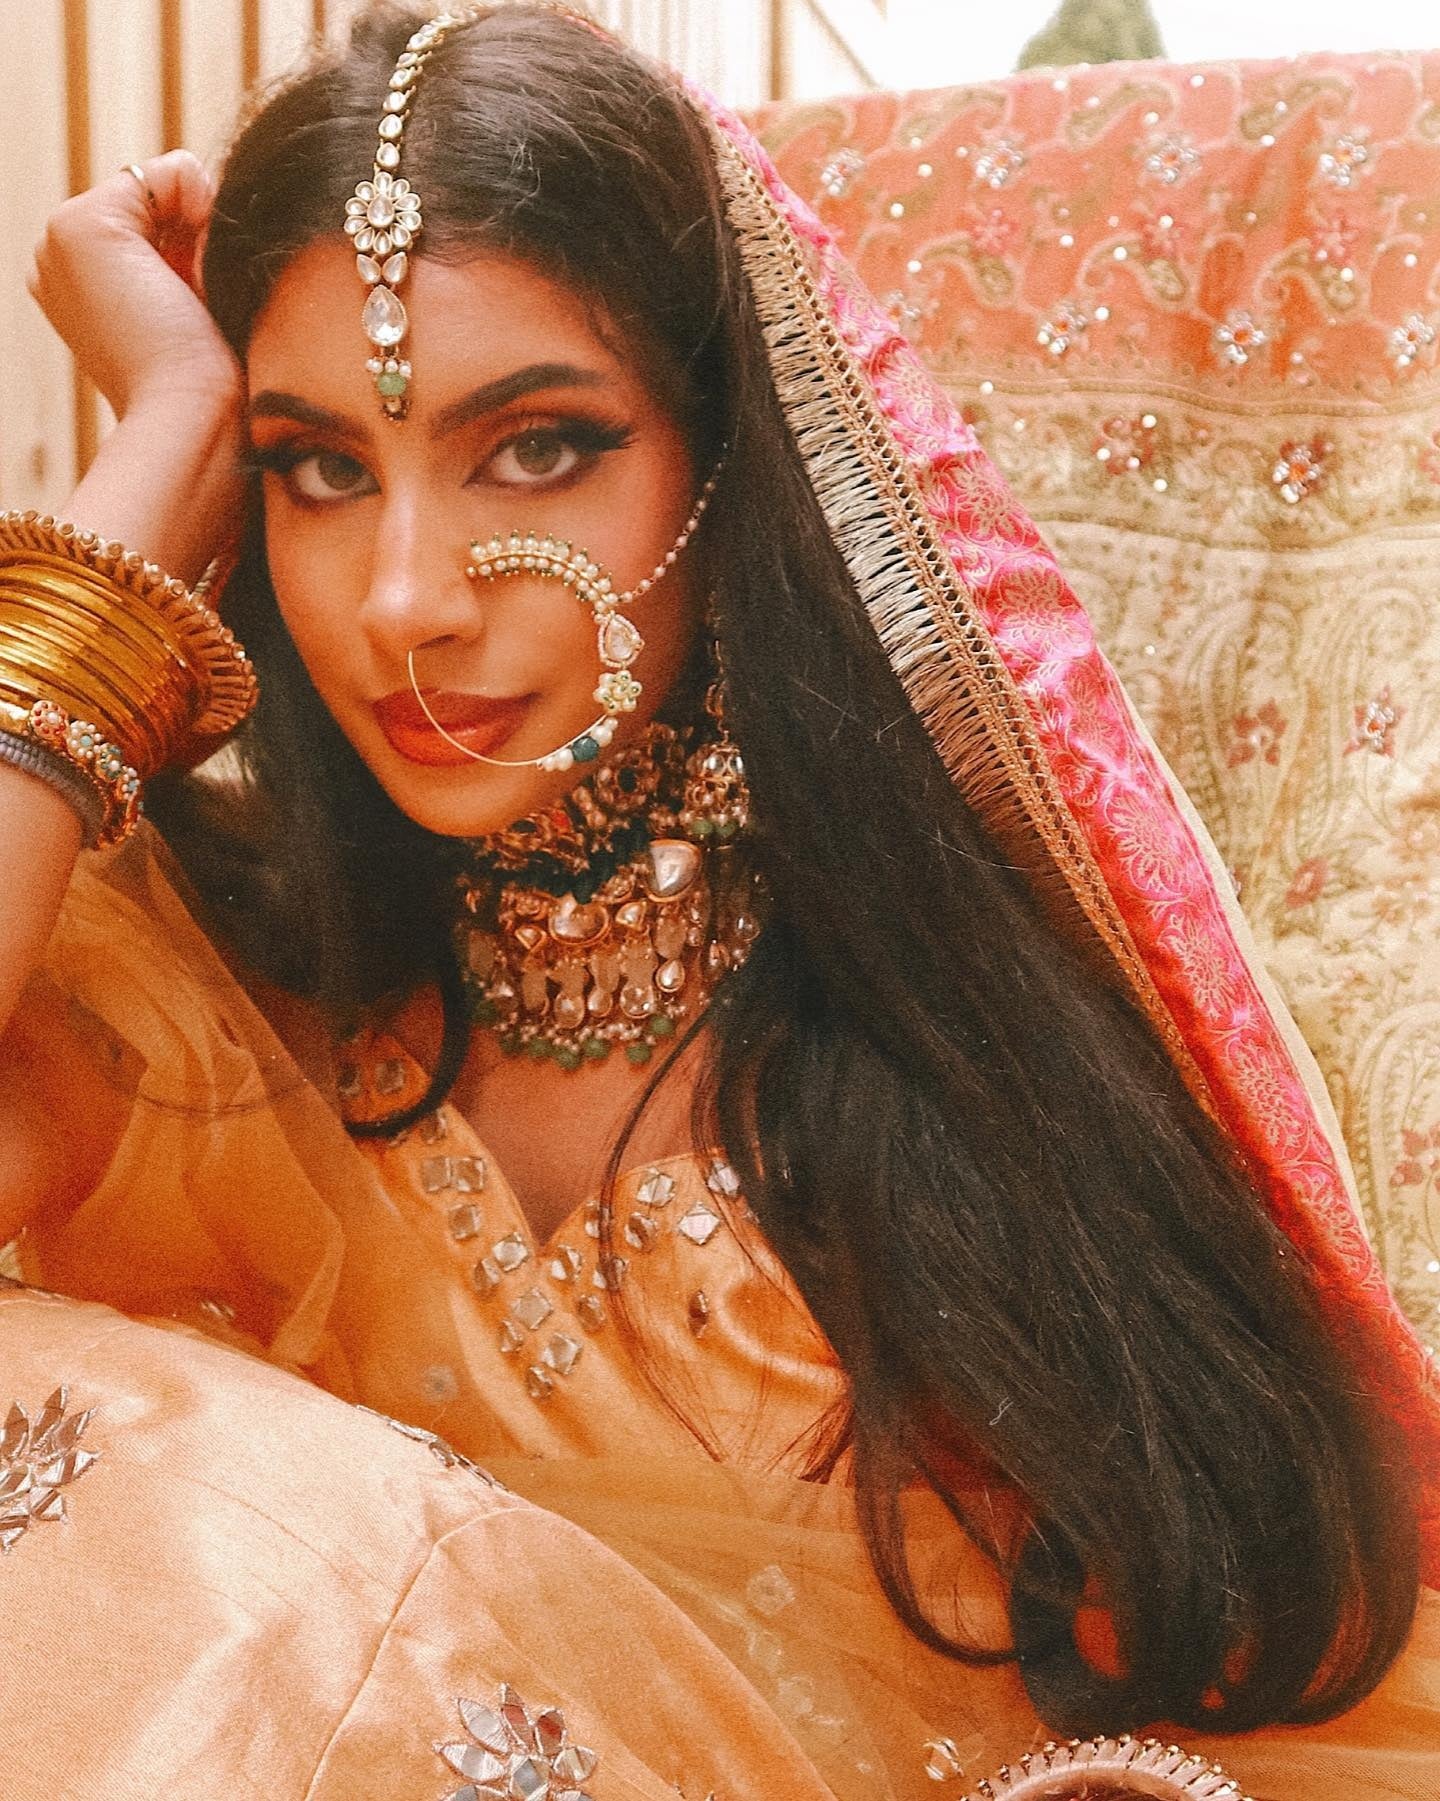 Gold nose ring | Bridal nose ring, Indian wedding photography, Bride